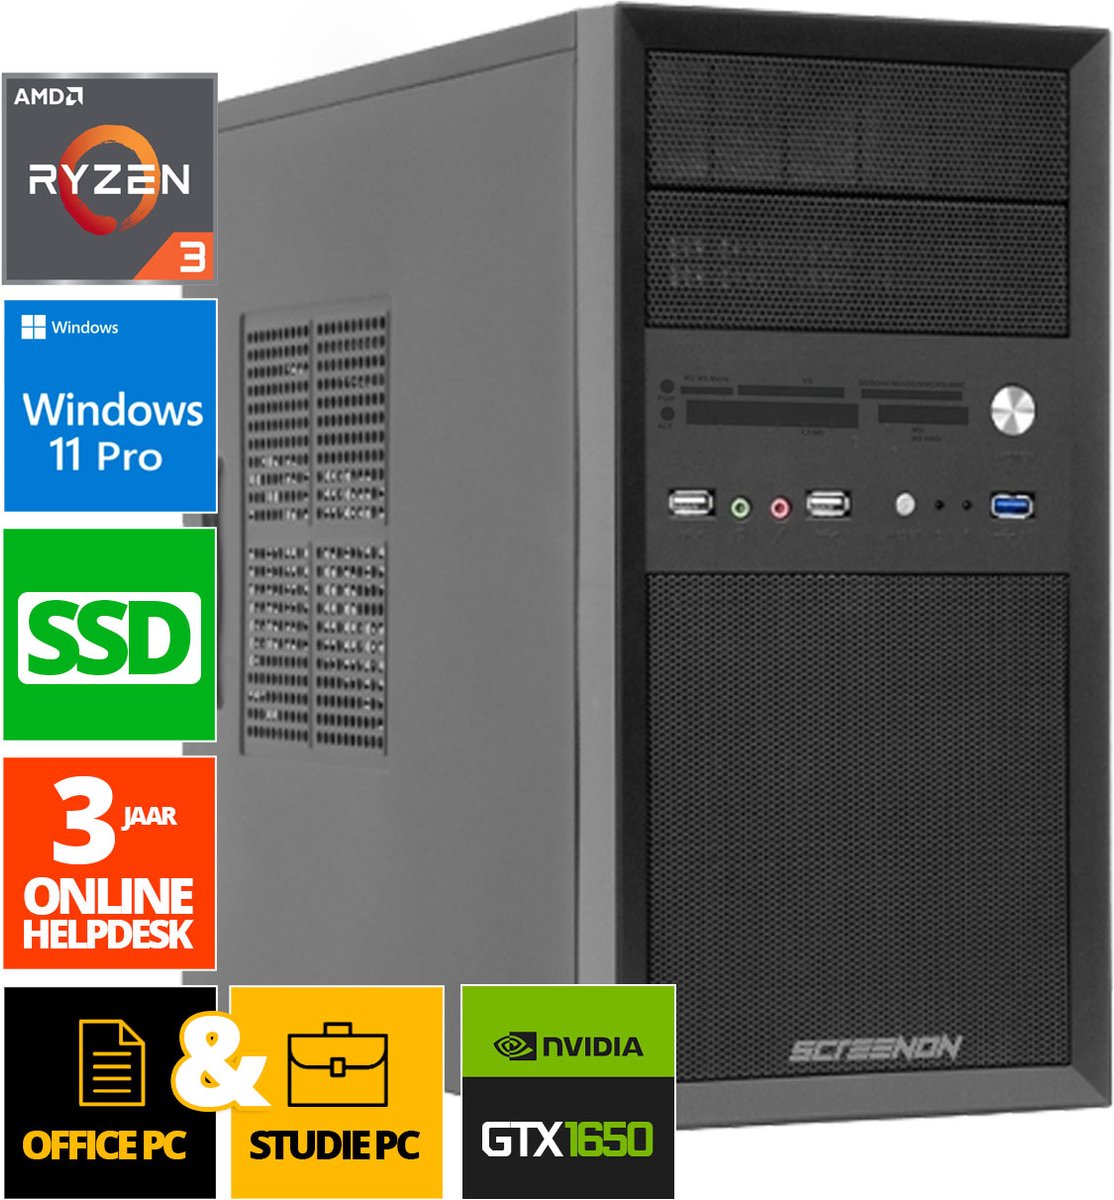 Office Computer - Ryzen 3 - 256GB SSD - 32GB RAM - GTX 1650 - WX32345 - Windows 11 - ScreenON - Allround Business PC + 5 in 1 Multifuntionele Cardreader + WiFi & Bluetooth